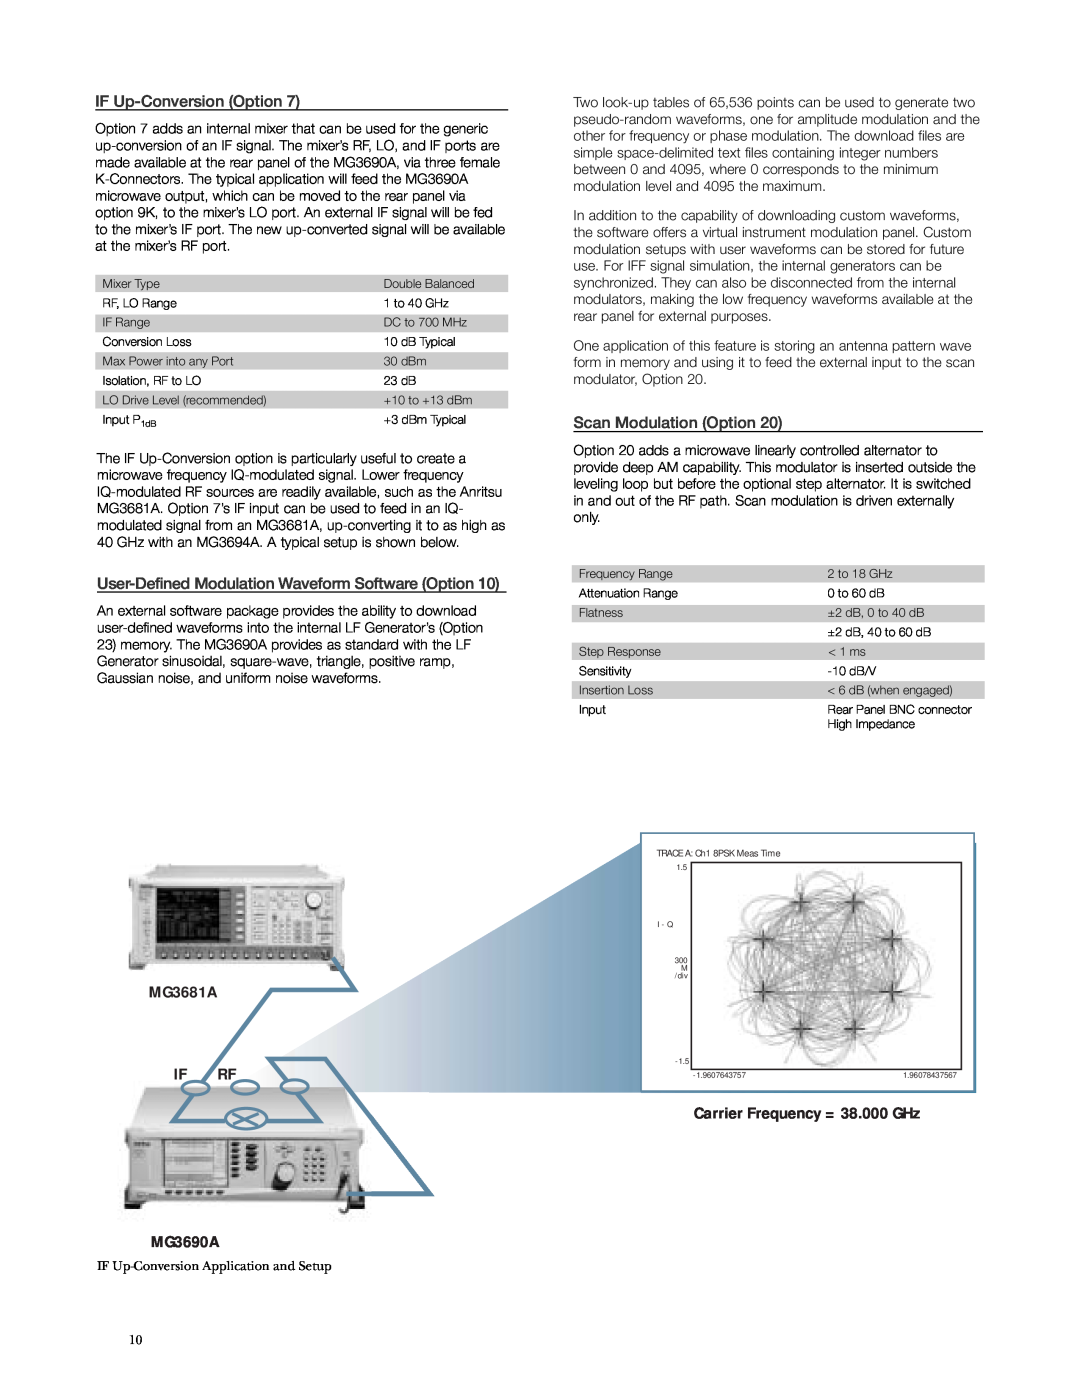 Anritsu MG3690A manual IF Up-ConversionOption, User-DefinedModulation Waveform Software Option, Scan Modulation Option 